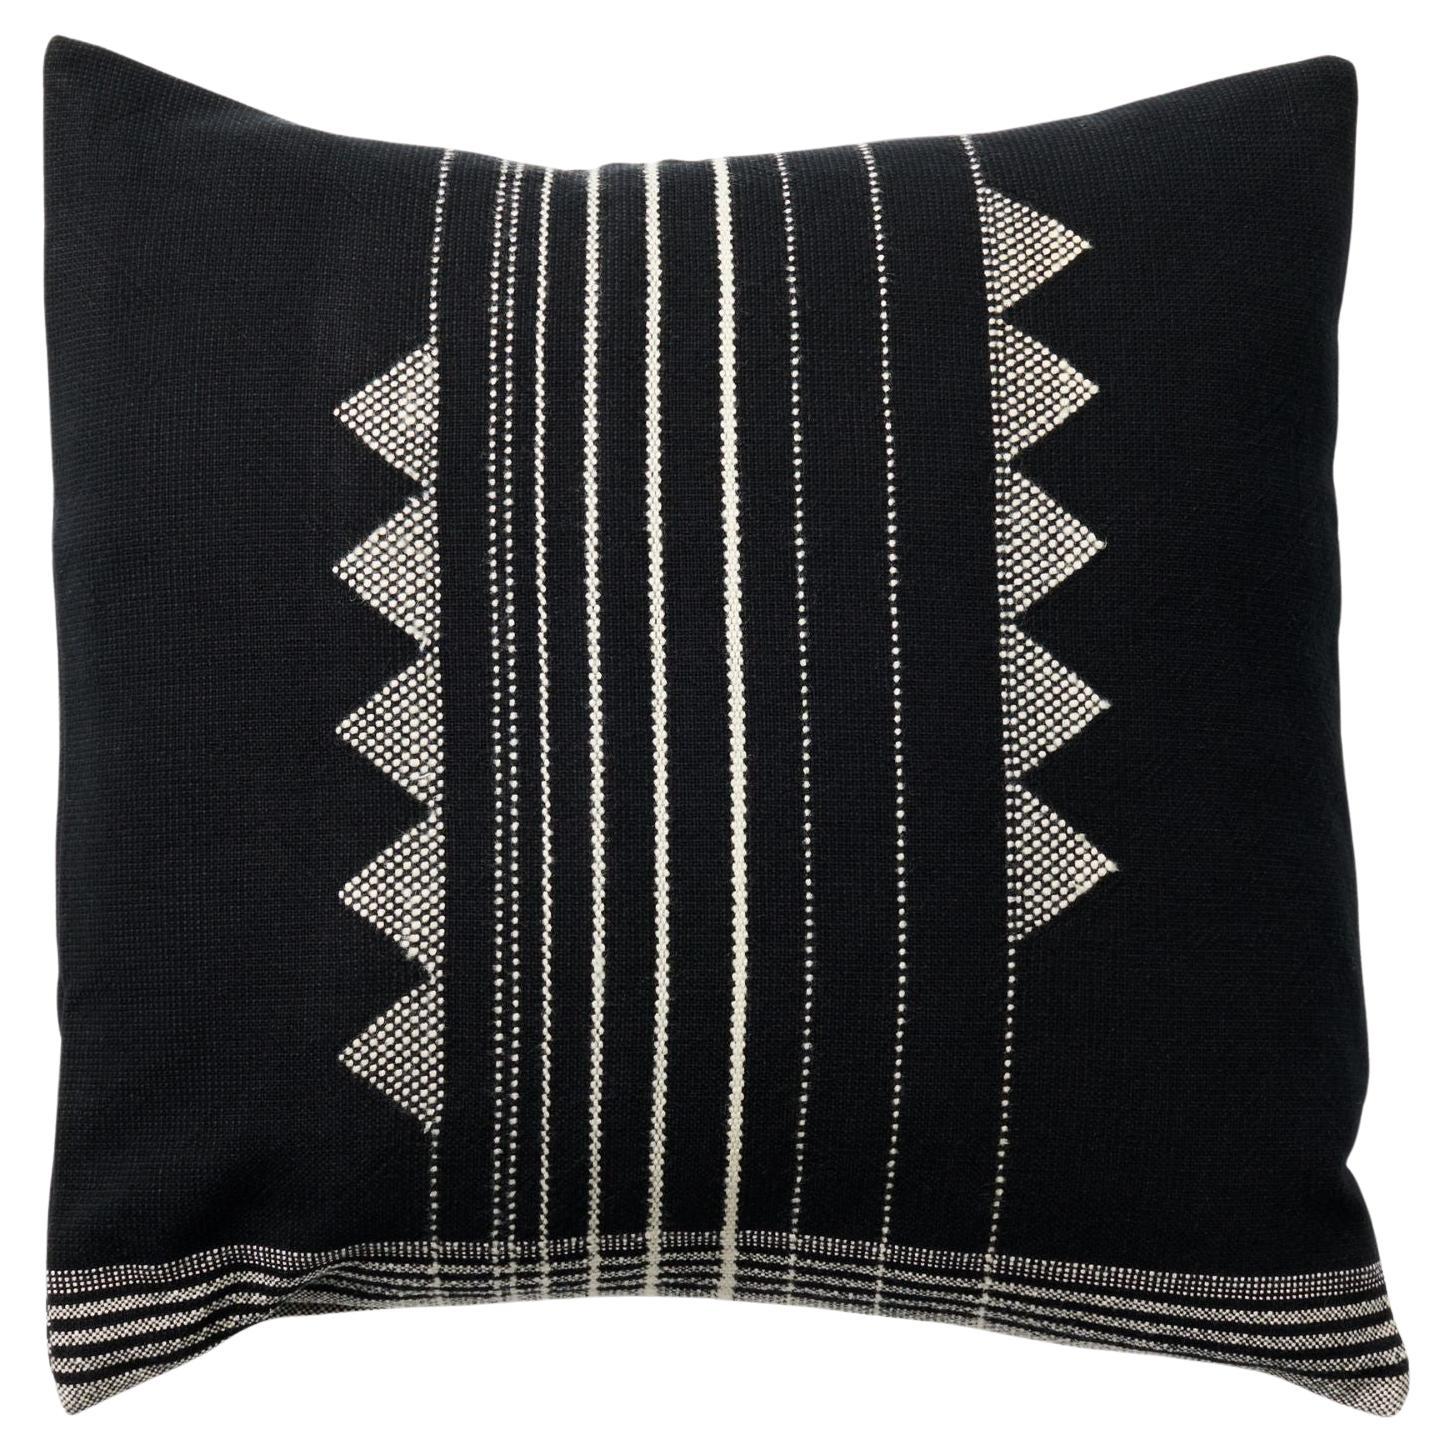 Kora Black in Silk Wool Cotton Blend, Black & White Handwoven Large Pillow For Sale